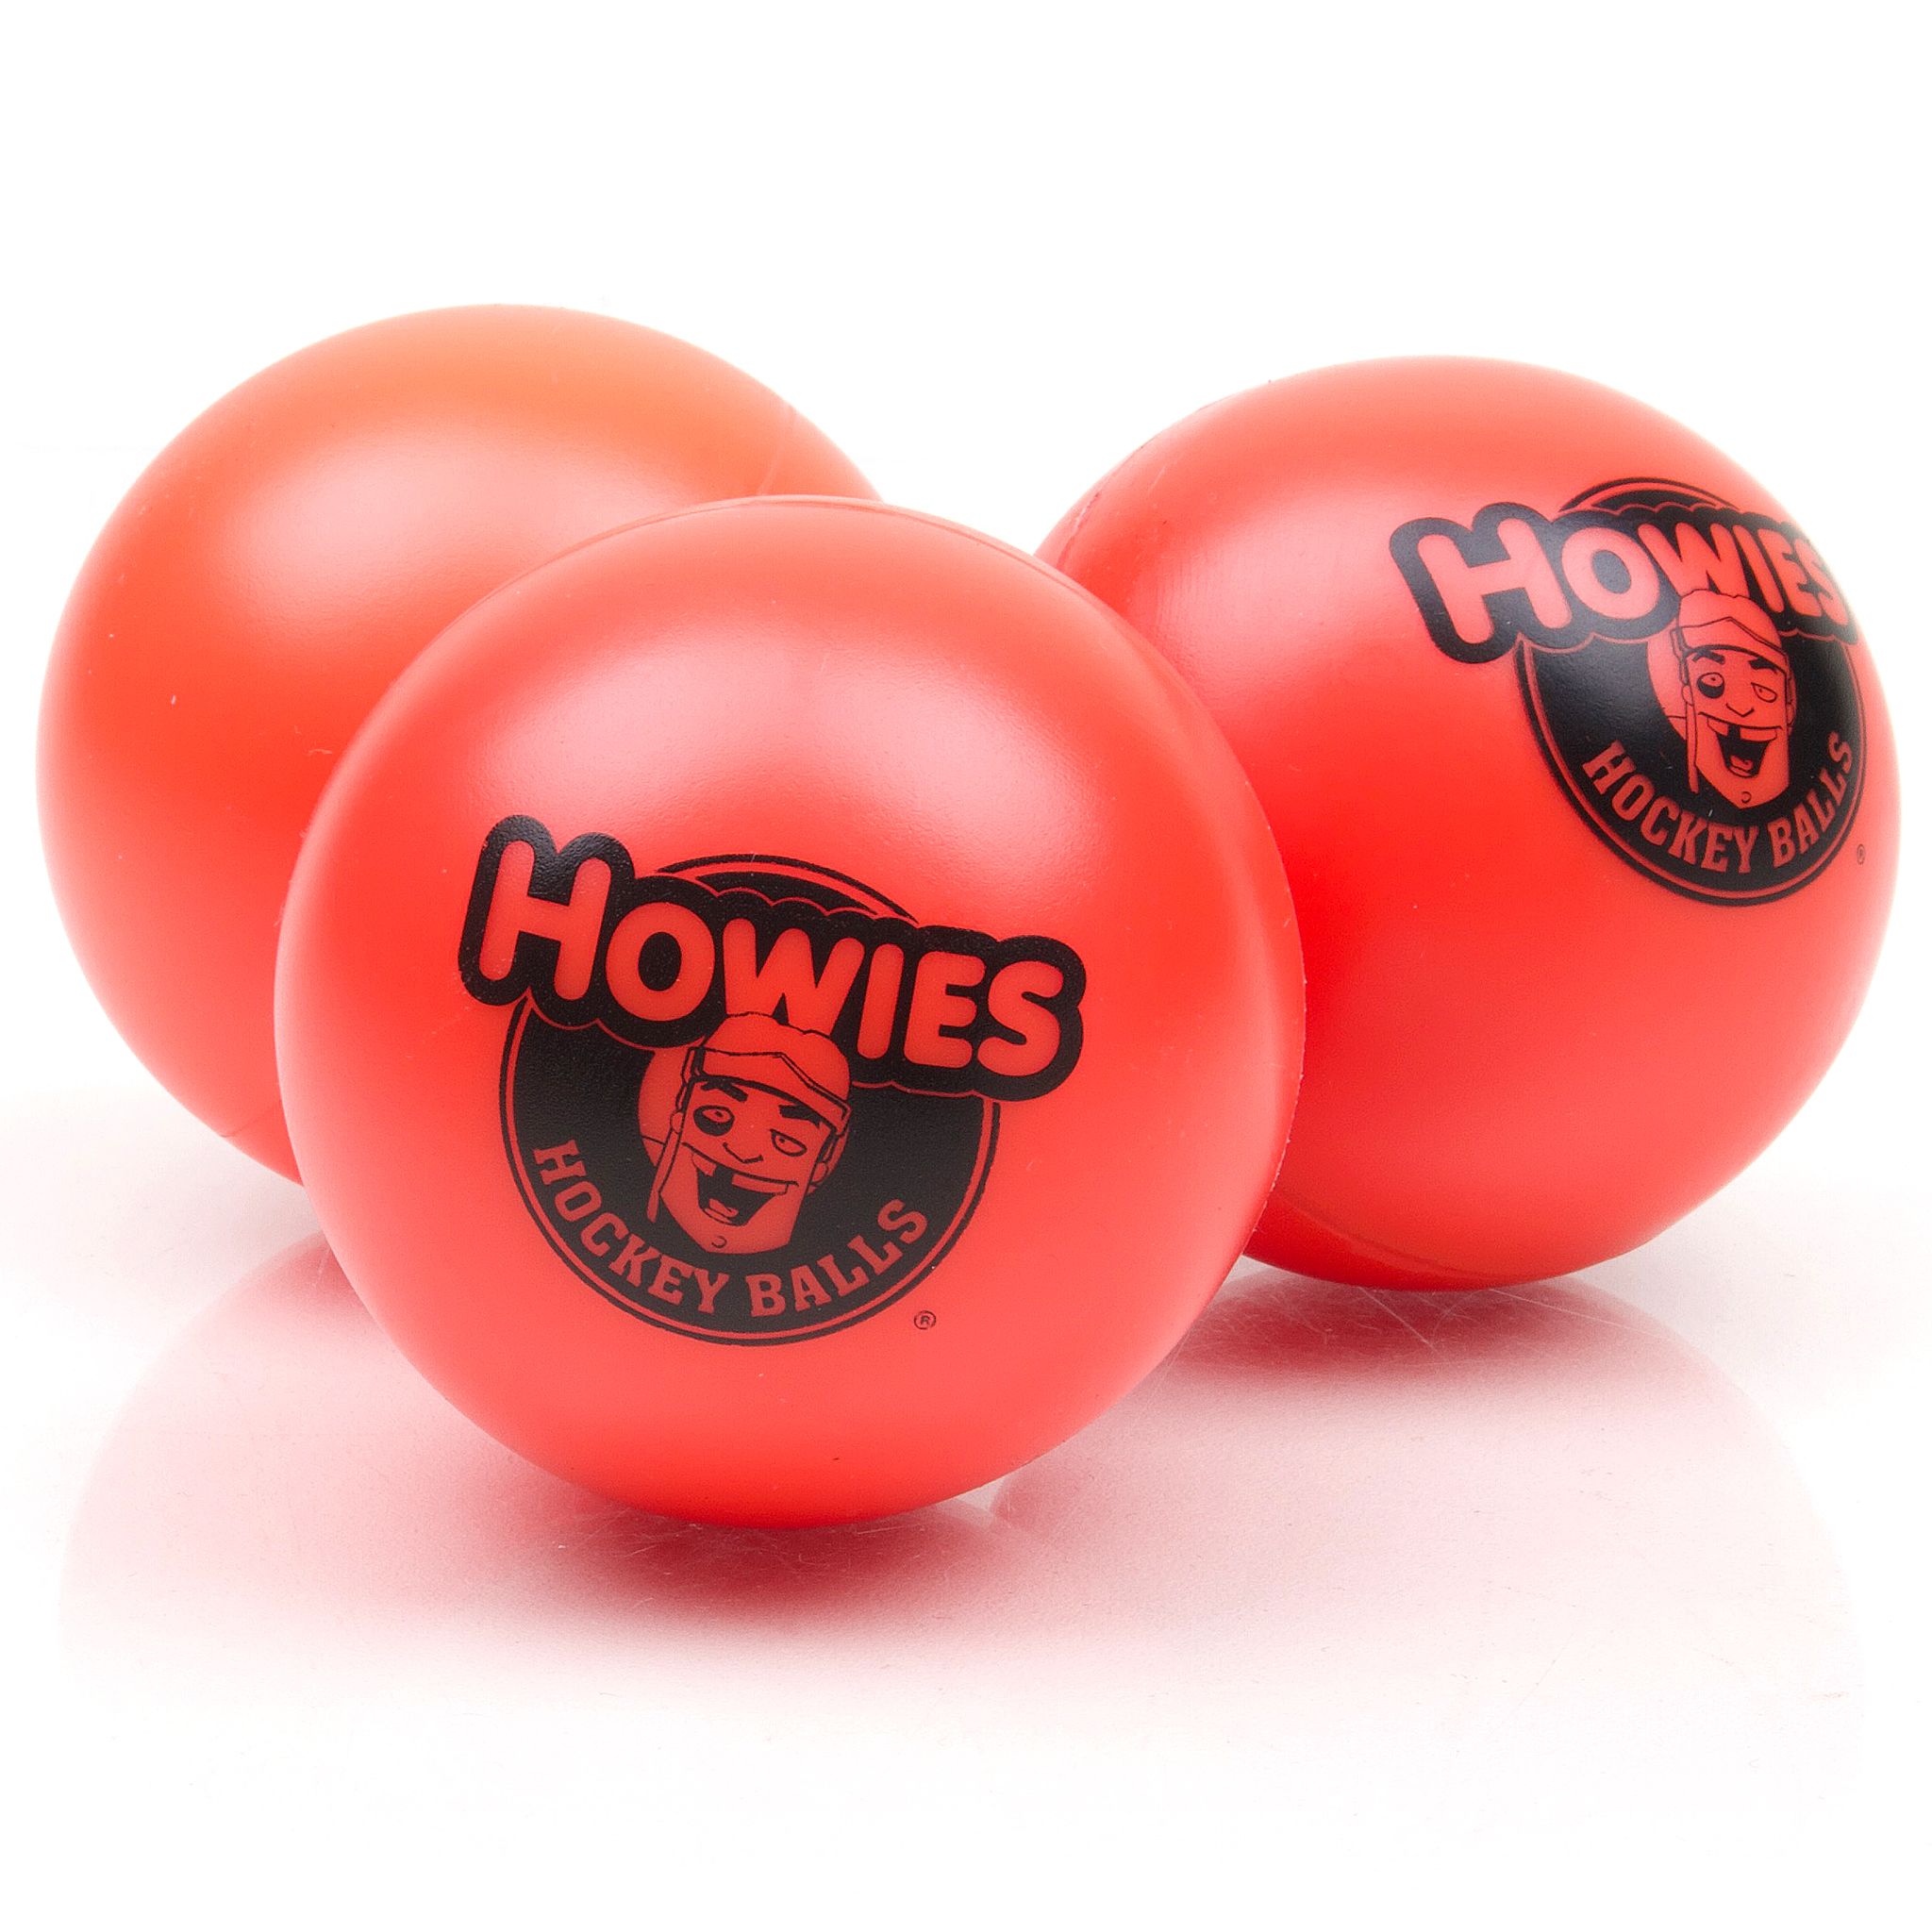 Howies Hockey Balls (100 Pack)